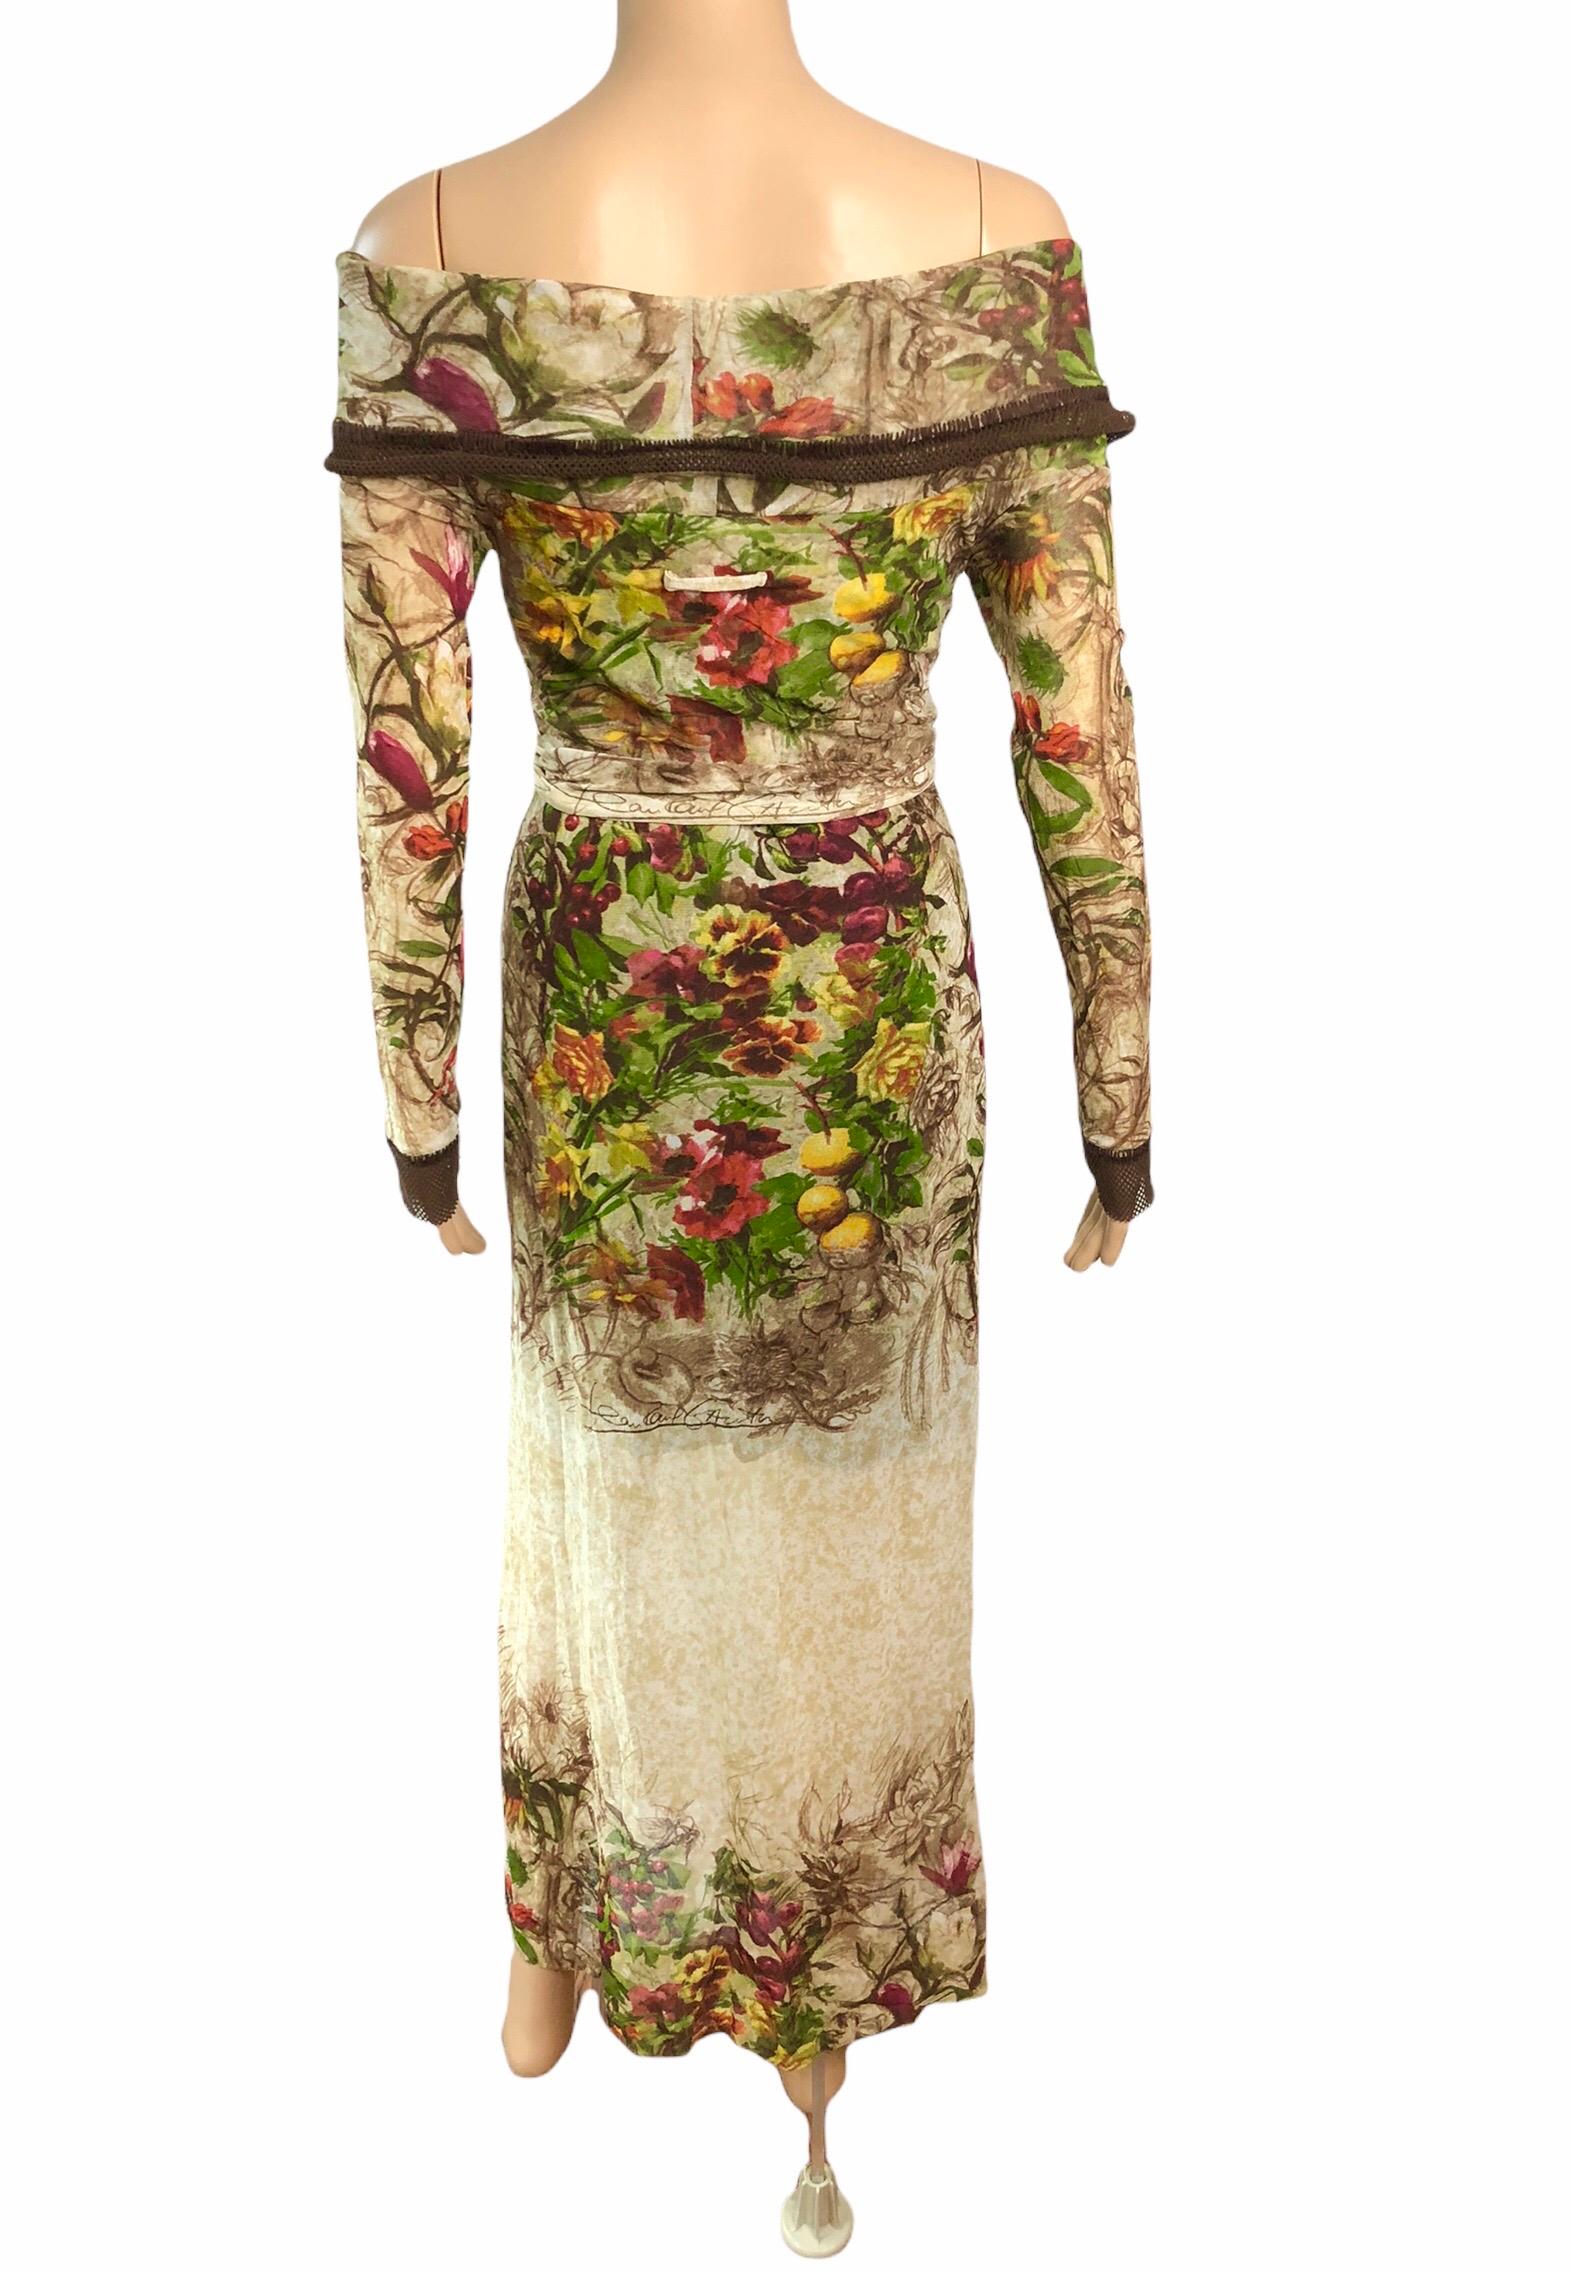 jean paul gaultier floral dress